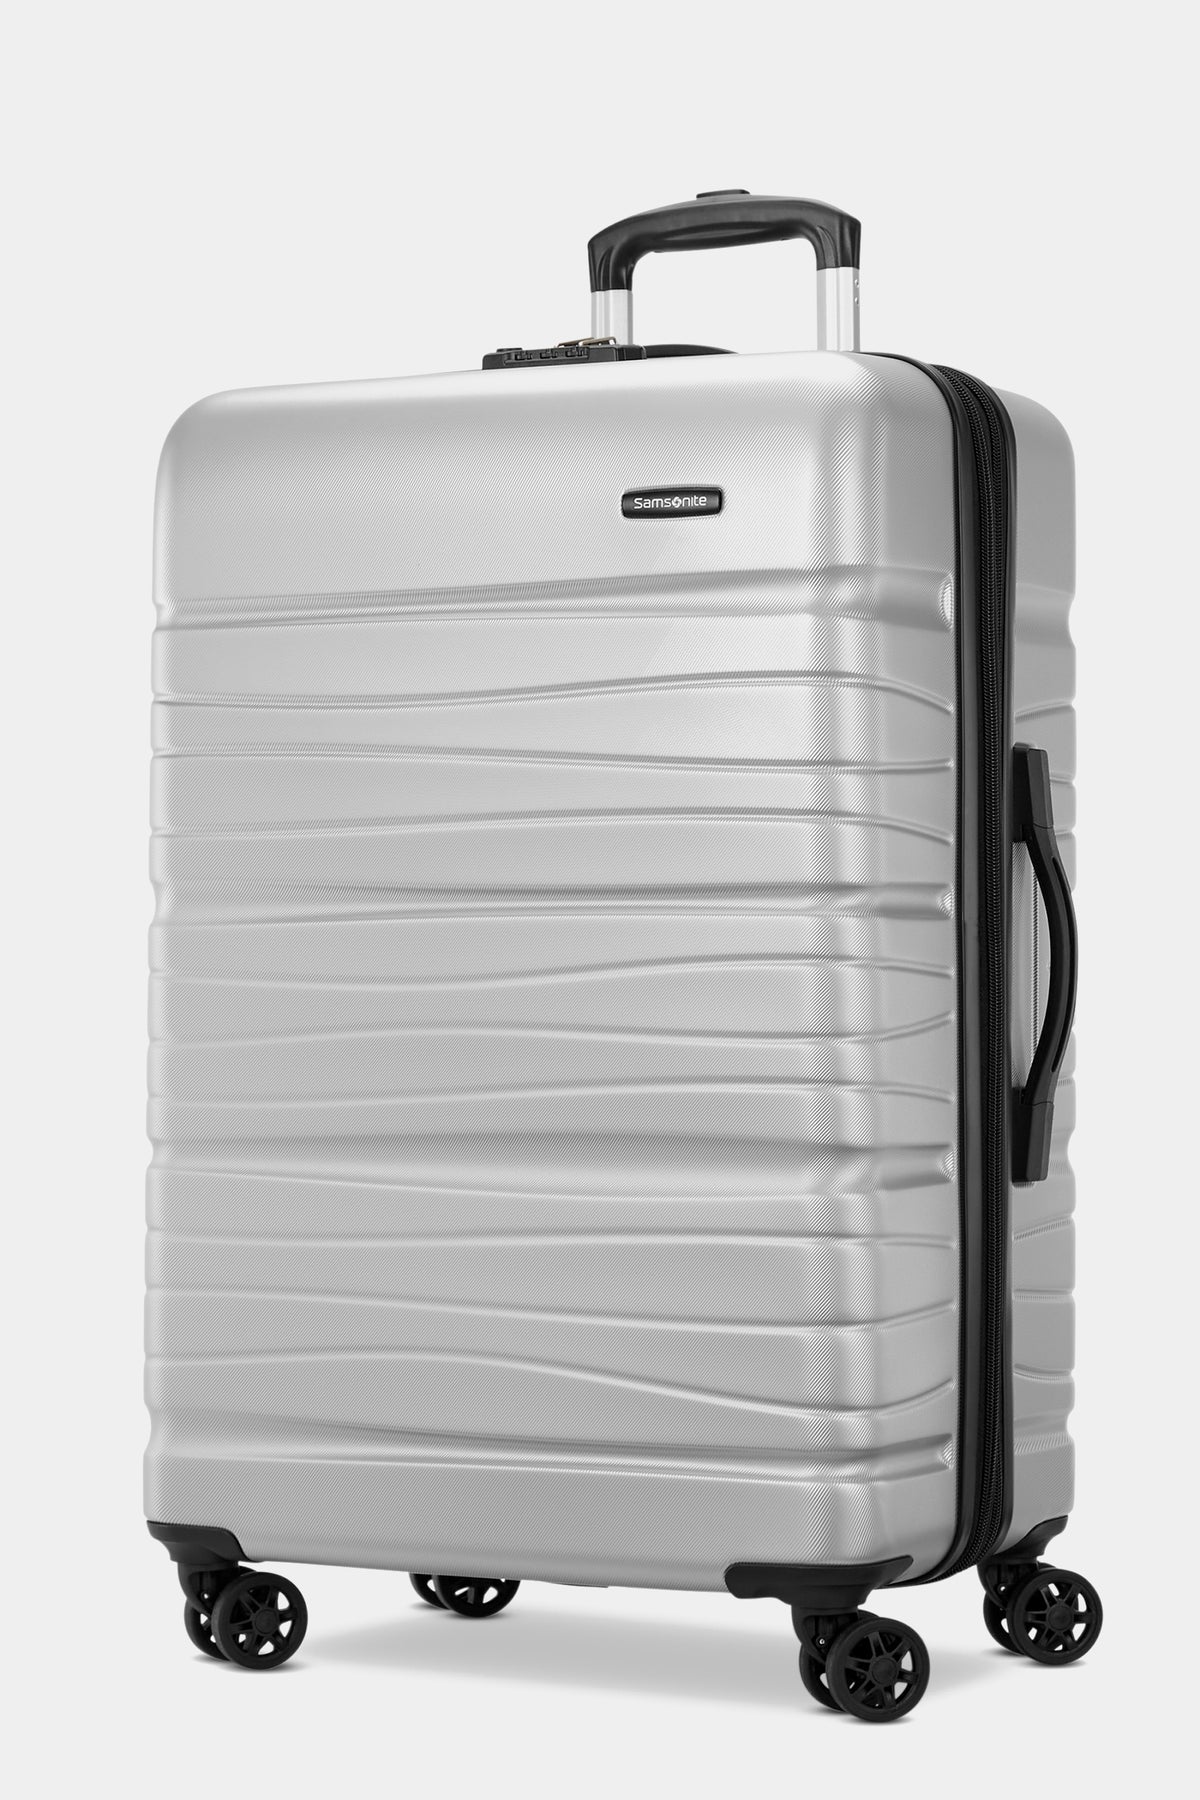 Samsonite Evolve SE Large Spinner – Luggage Pros